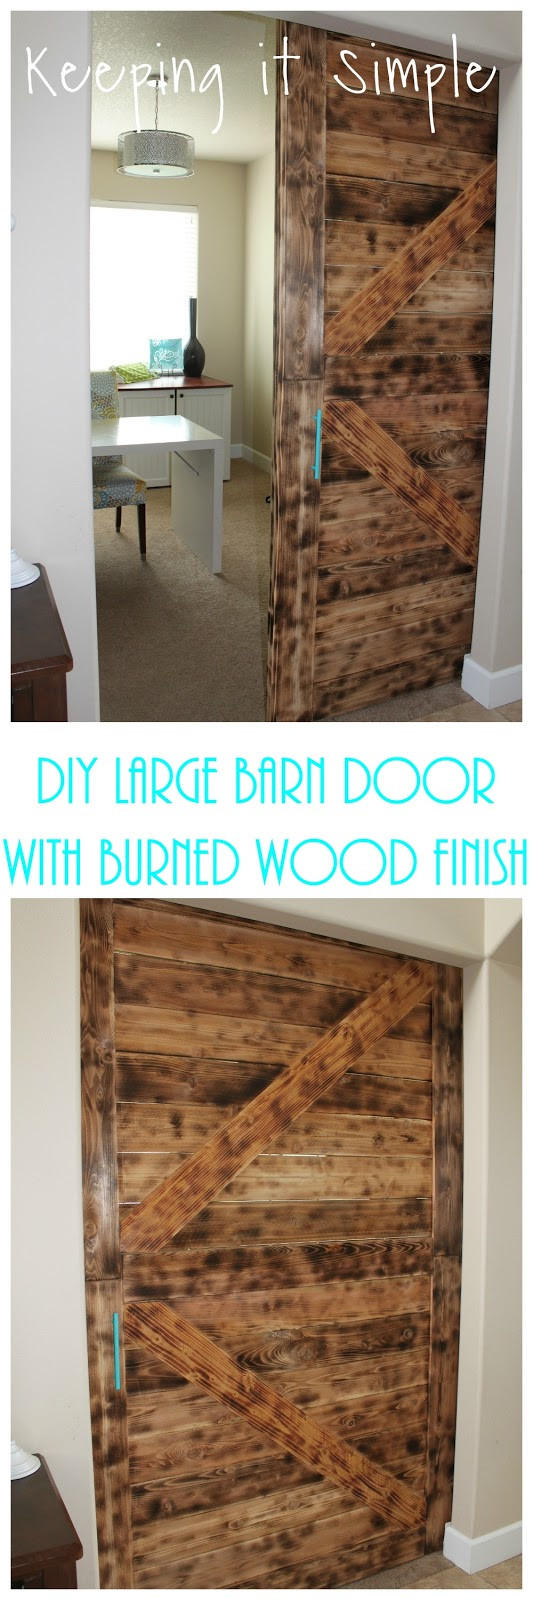 Burnt Wood Finish DIY
 DIY Barn Door with Burned Wood Finish Perfect for